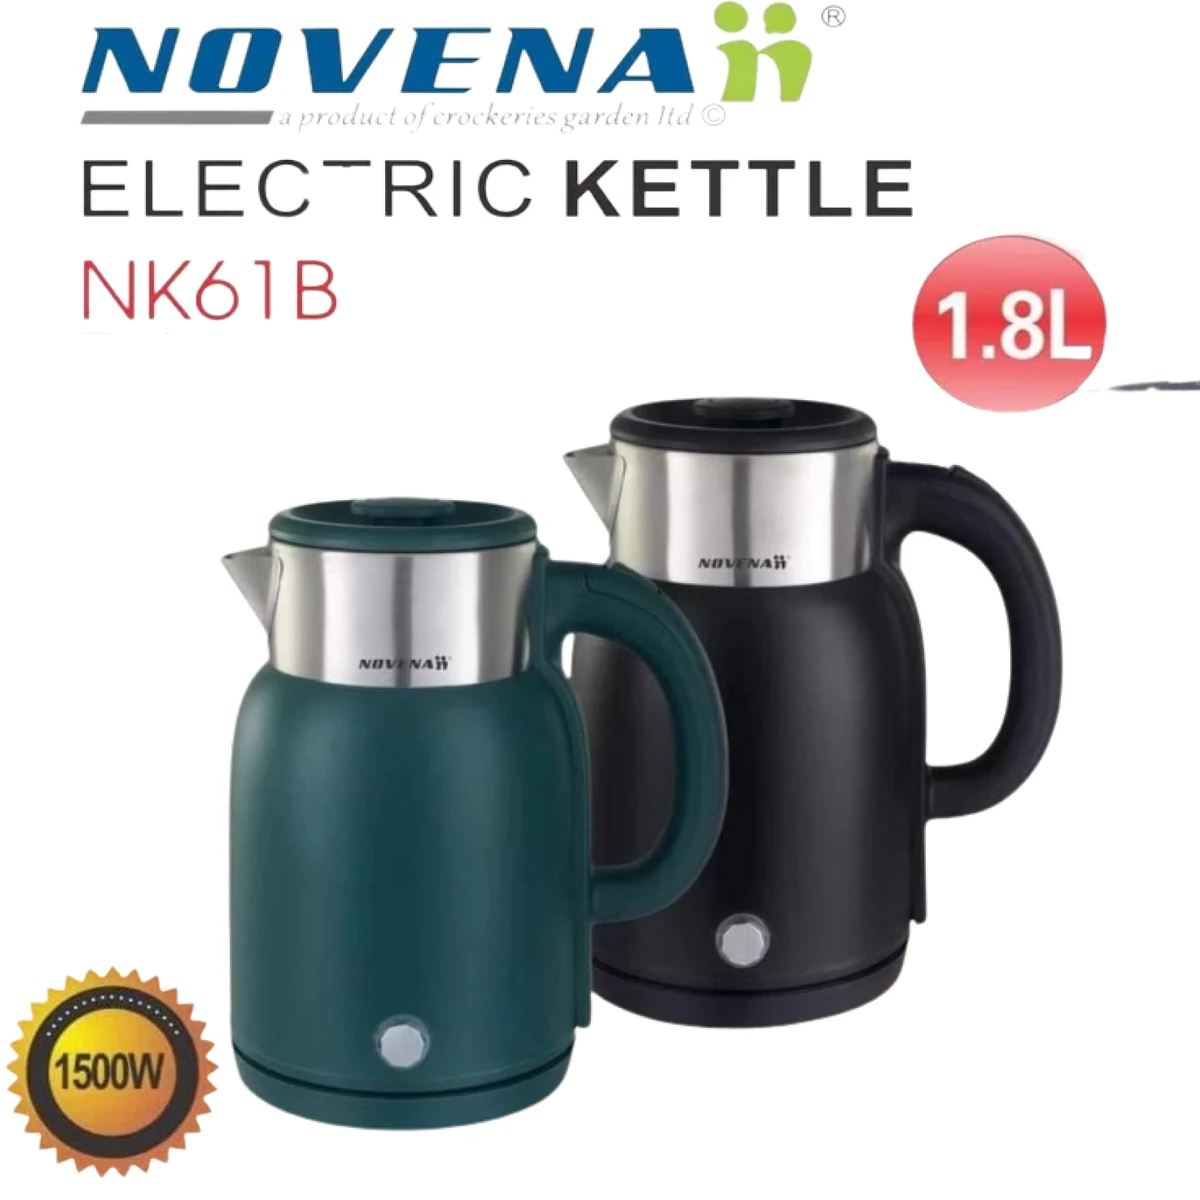 NOVENA Electrick Kettle (NK61B)